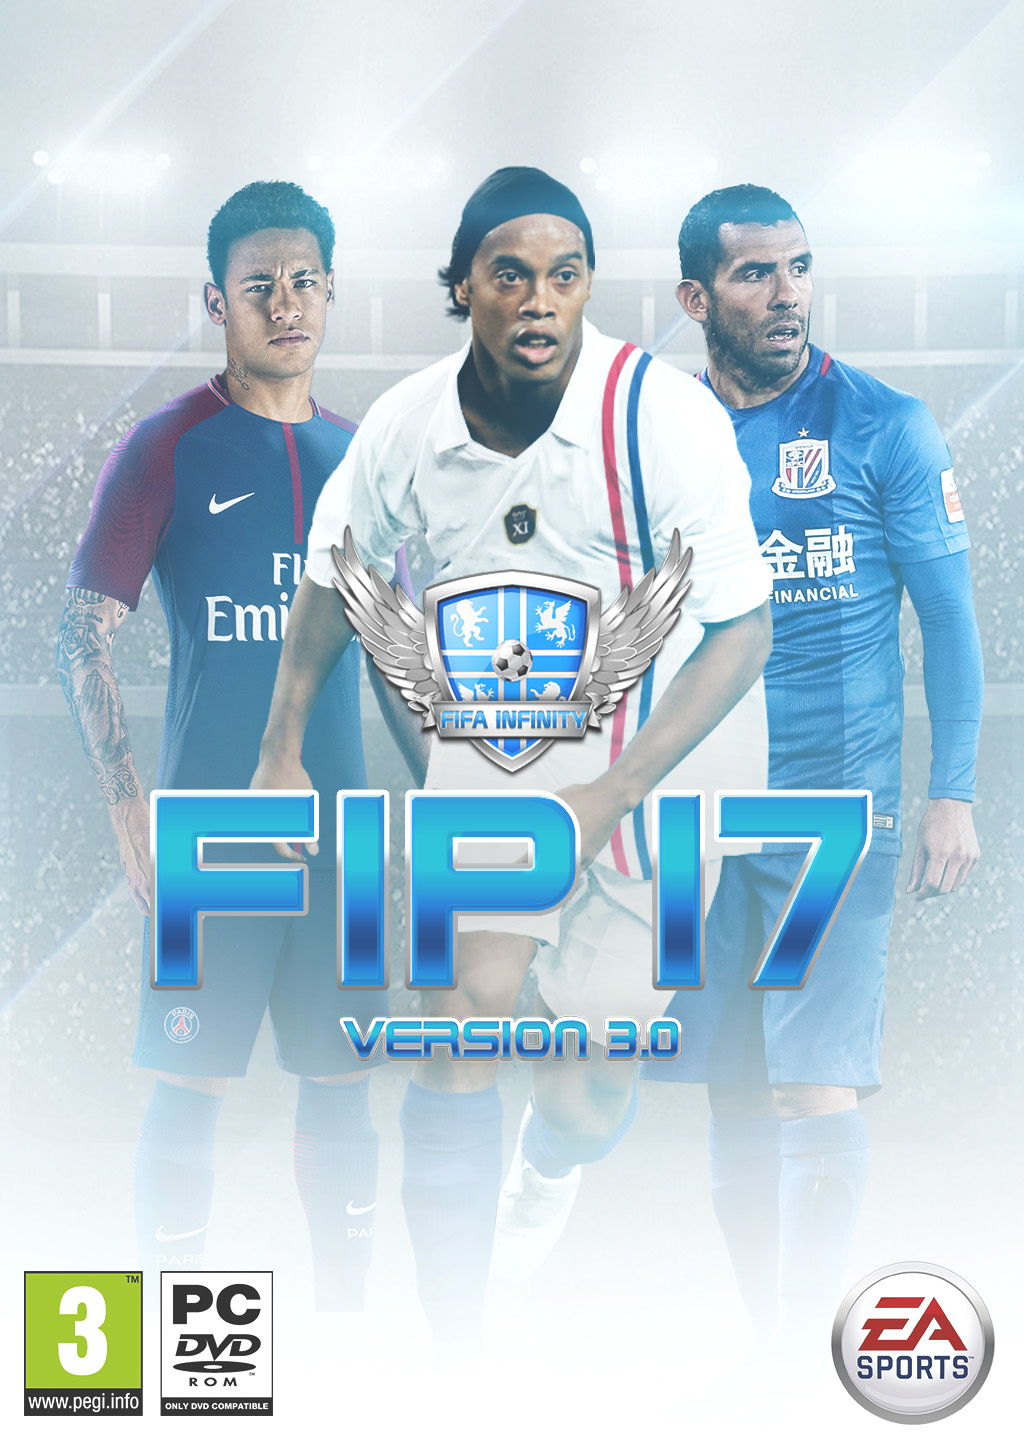 fifa 17 squad update file